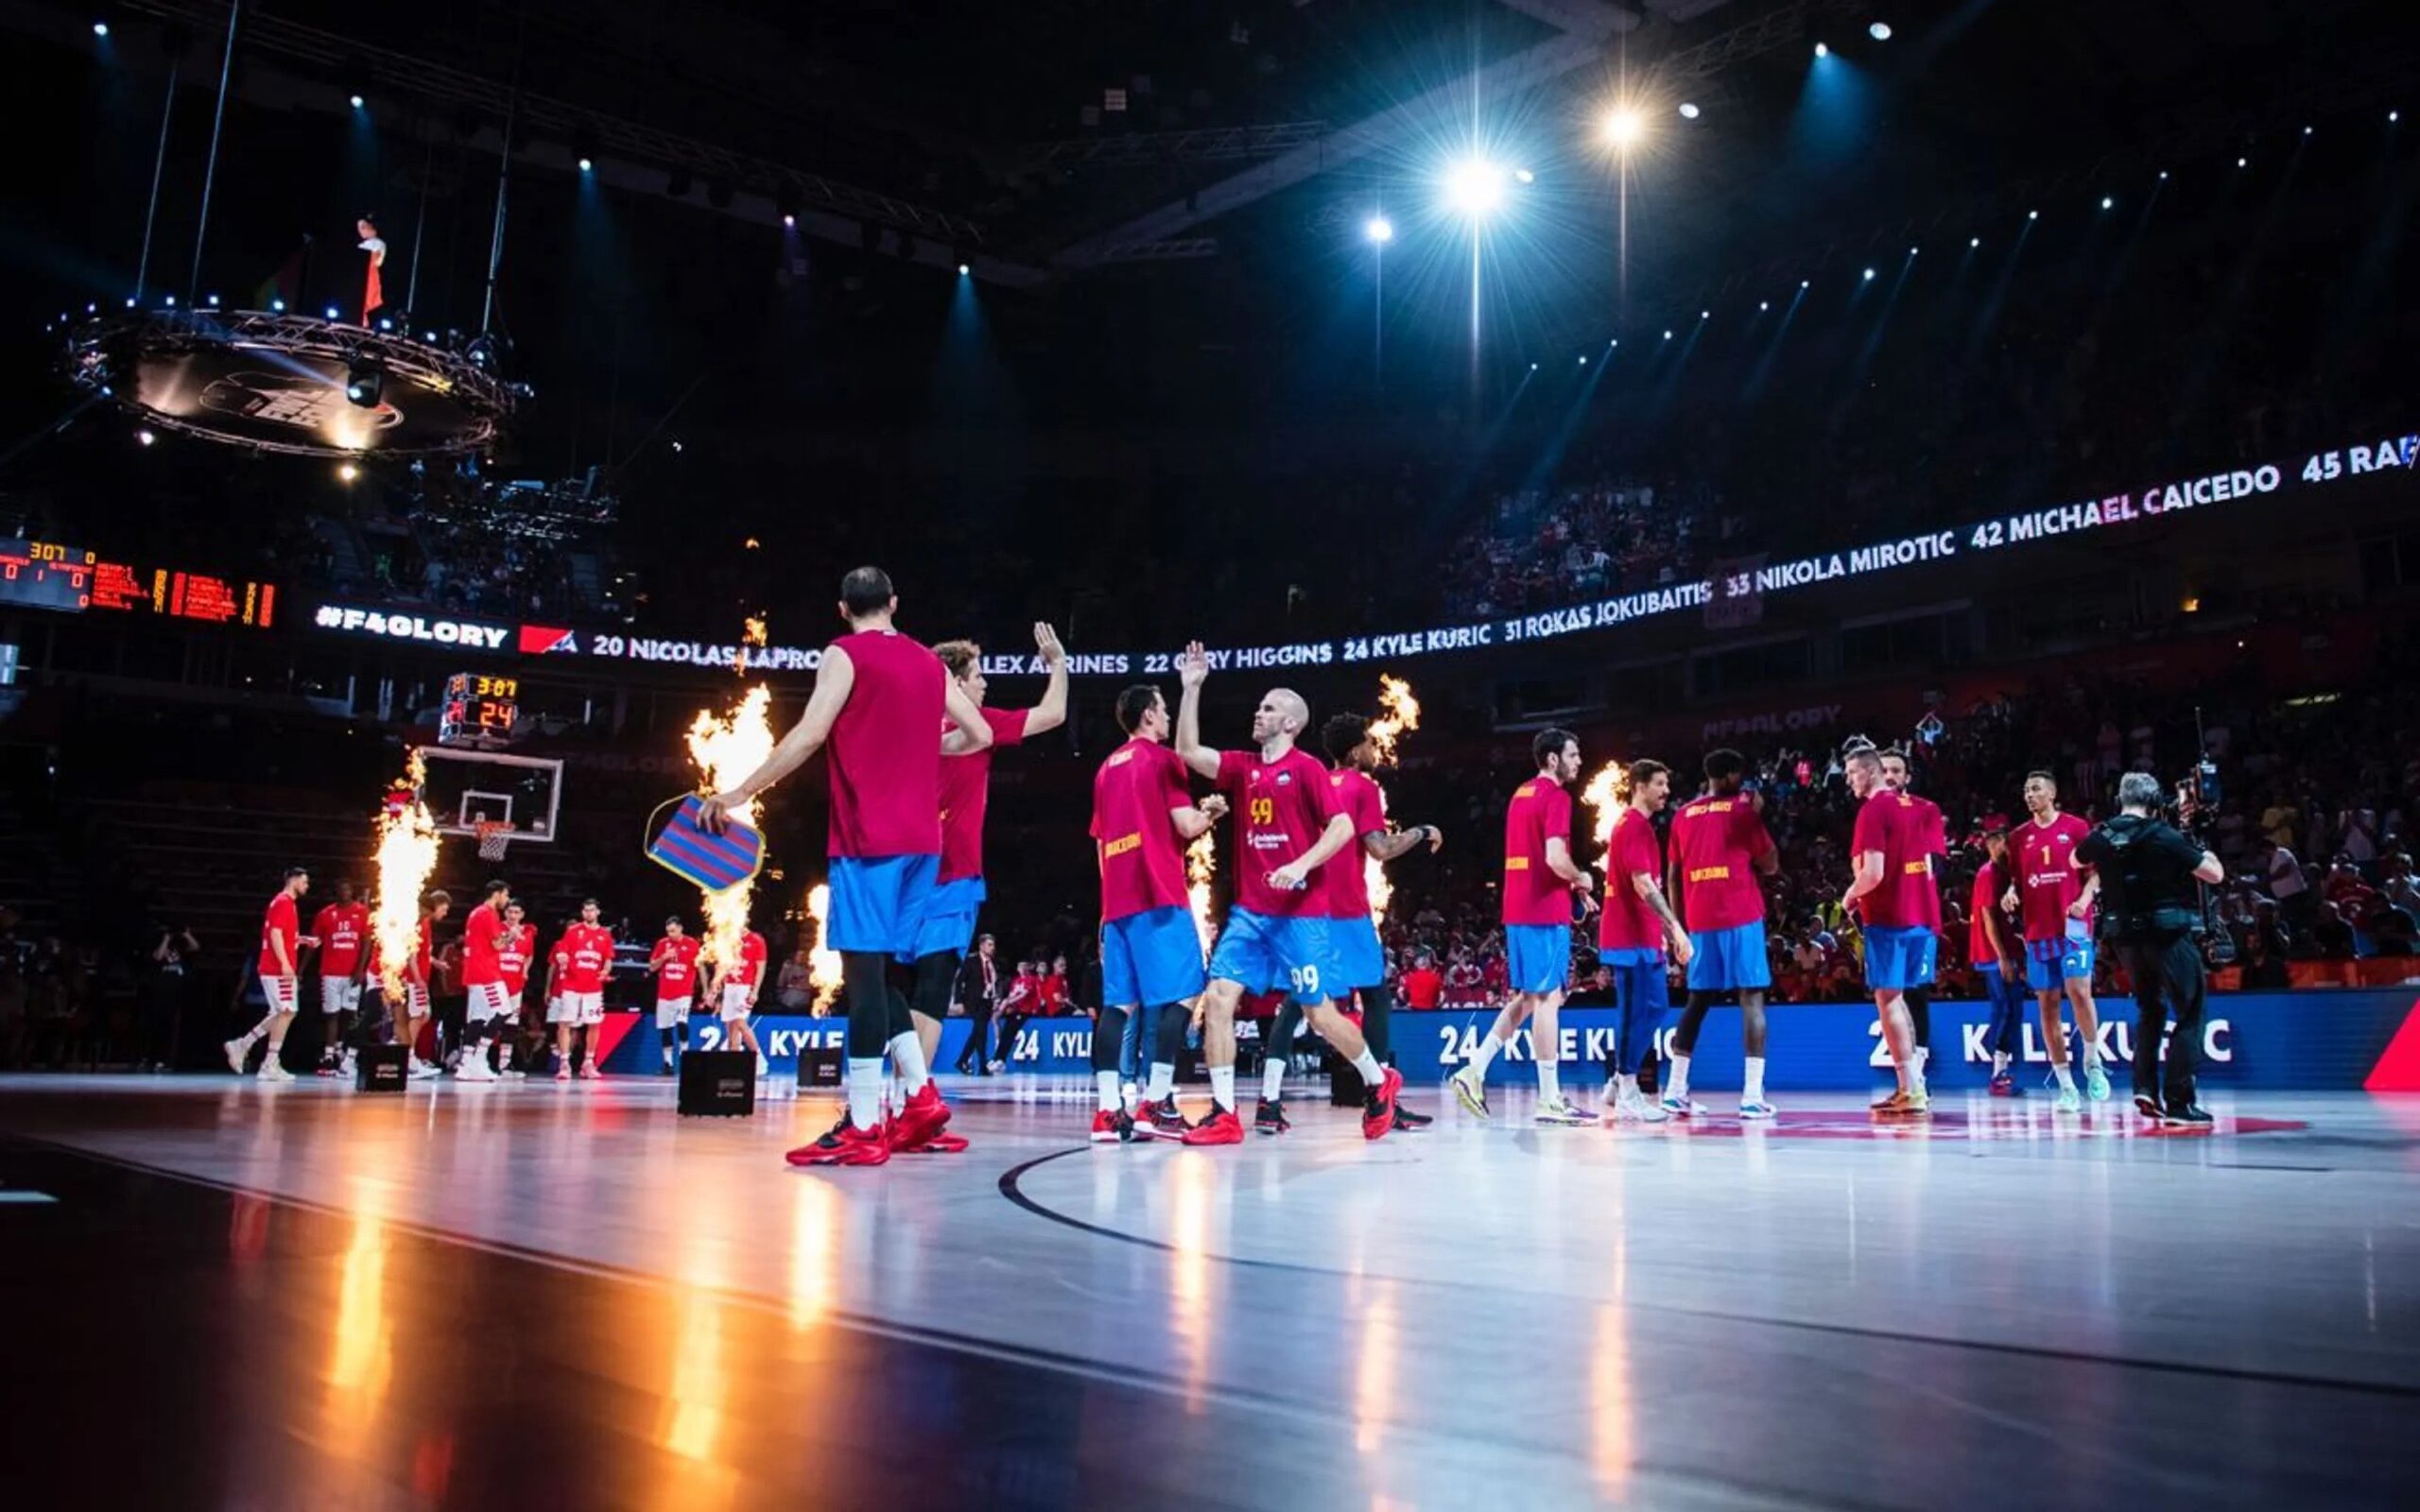 Seeking to bring Euroleague basketball to Barcelona in 2025